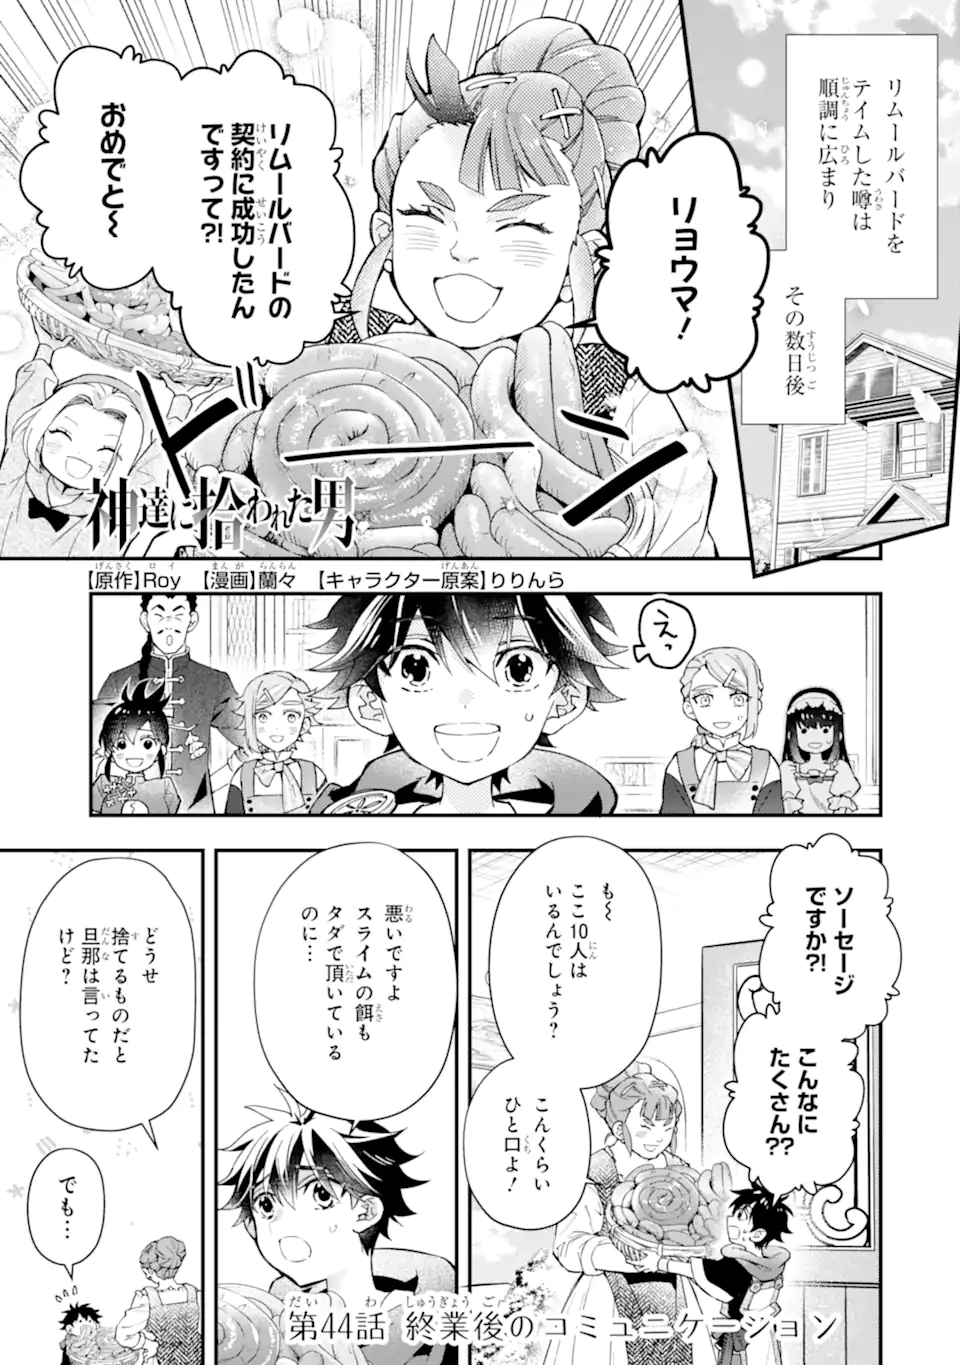 Read Kamitachi ni Hirowareta Otoko Manga English [New Chapters